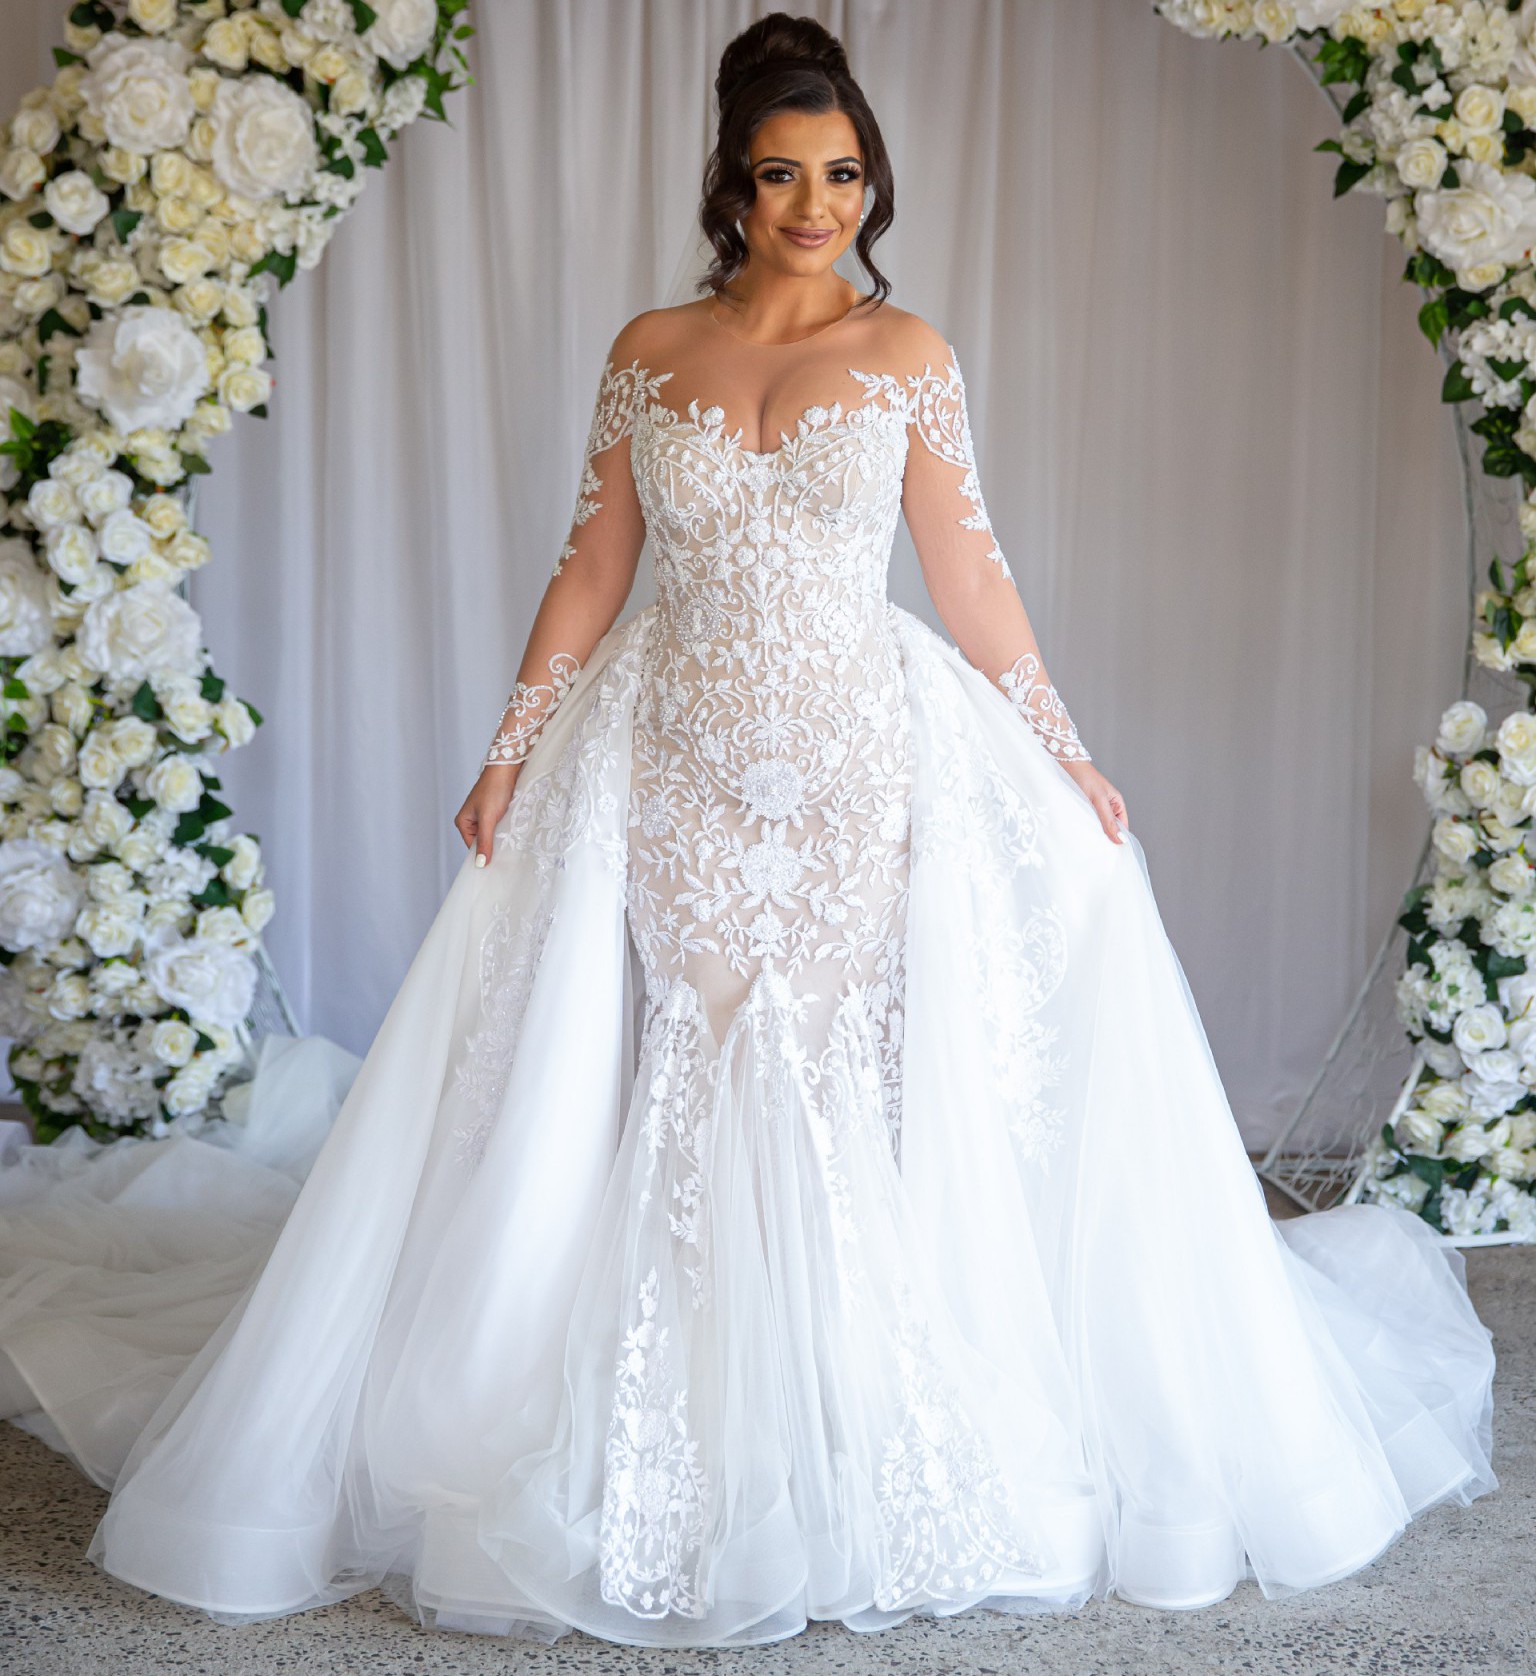 Leah Da Gloria Preowned Wedding Dress Save 75% - Stillwhite